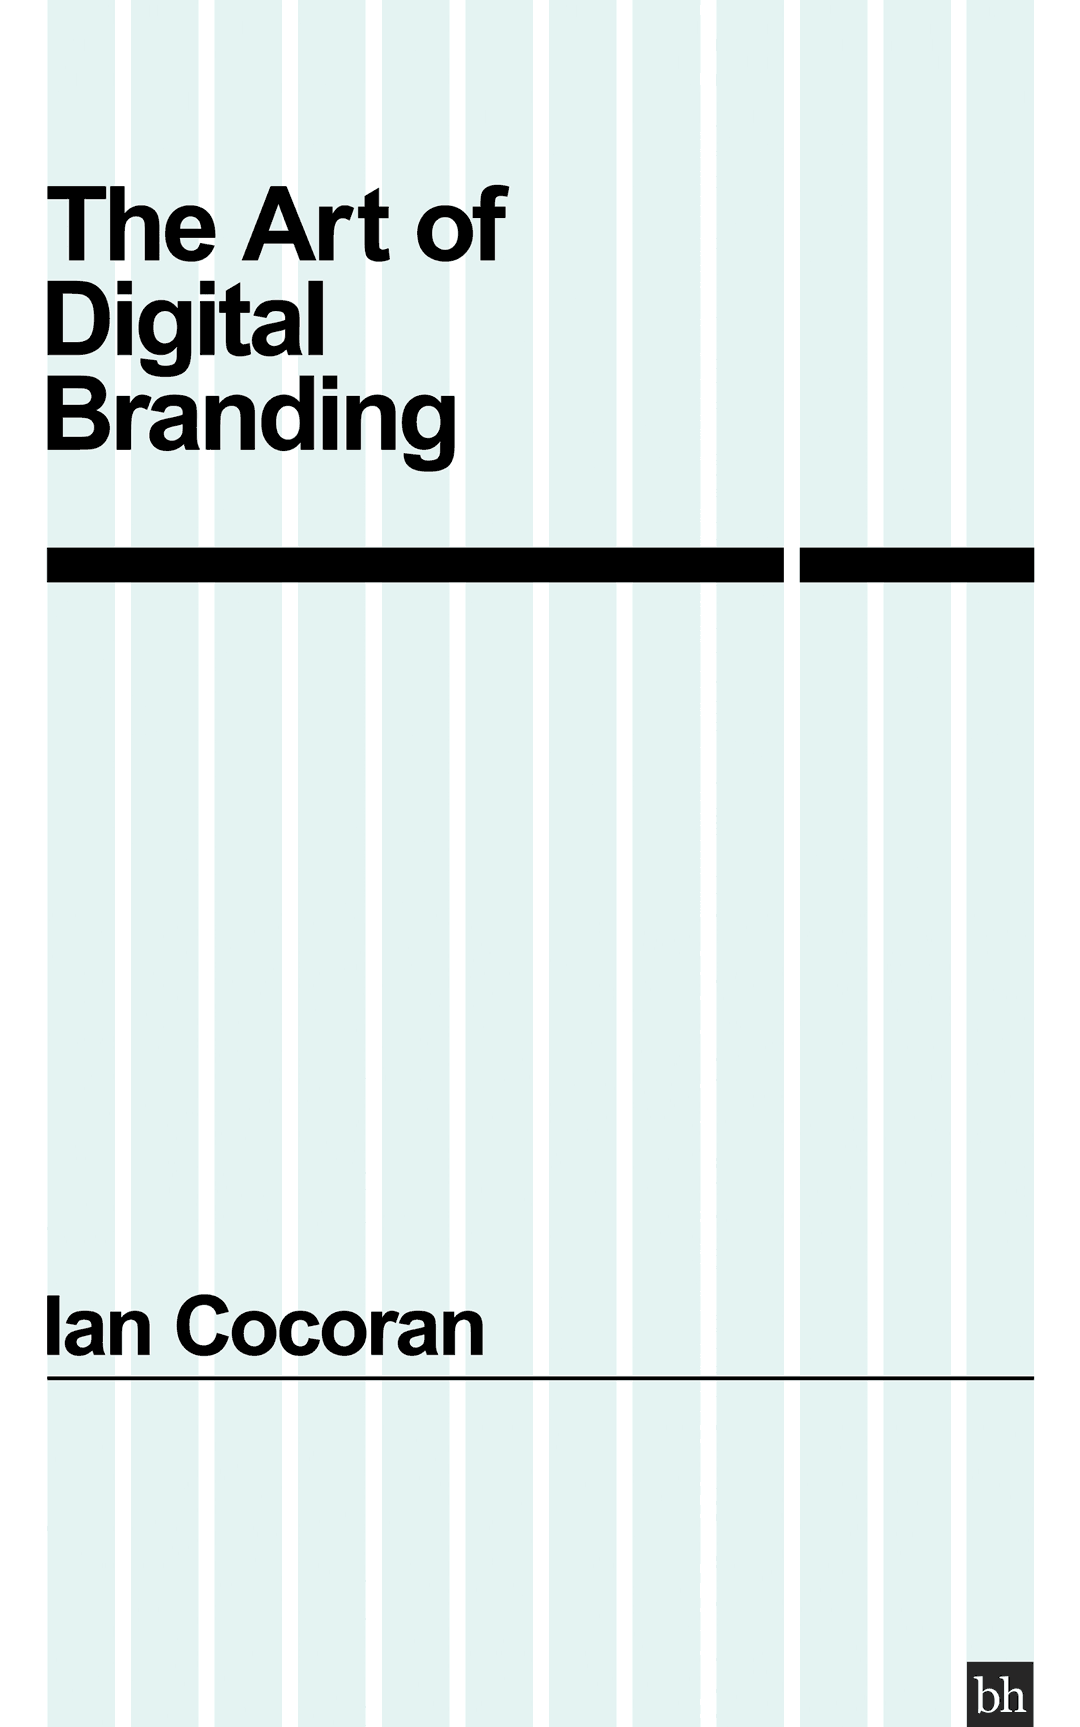 The Art of Digital Branding by Ian Cocoran